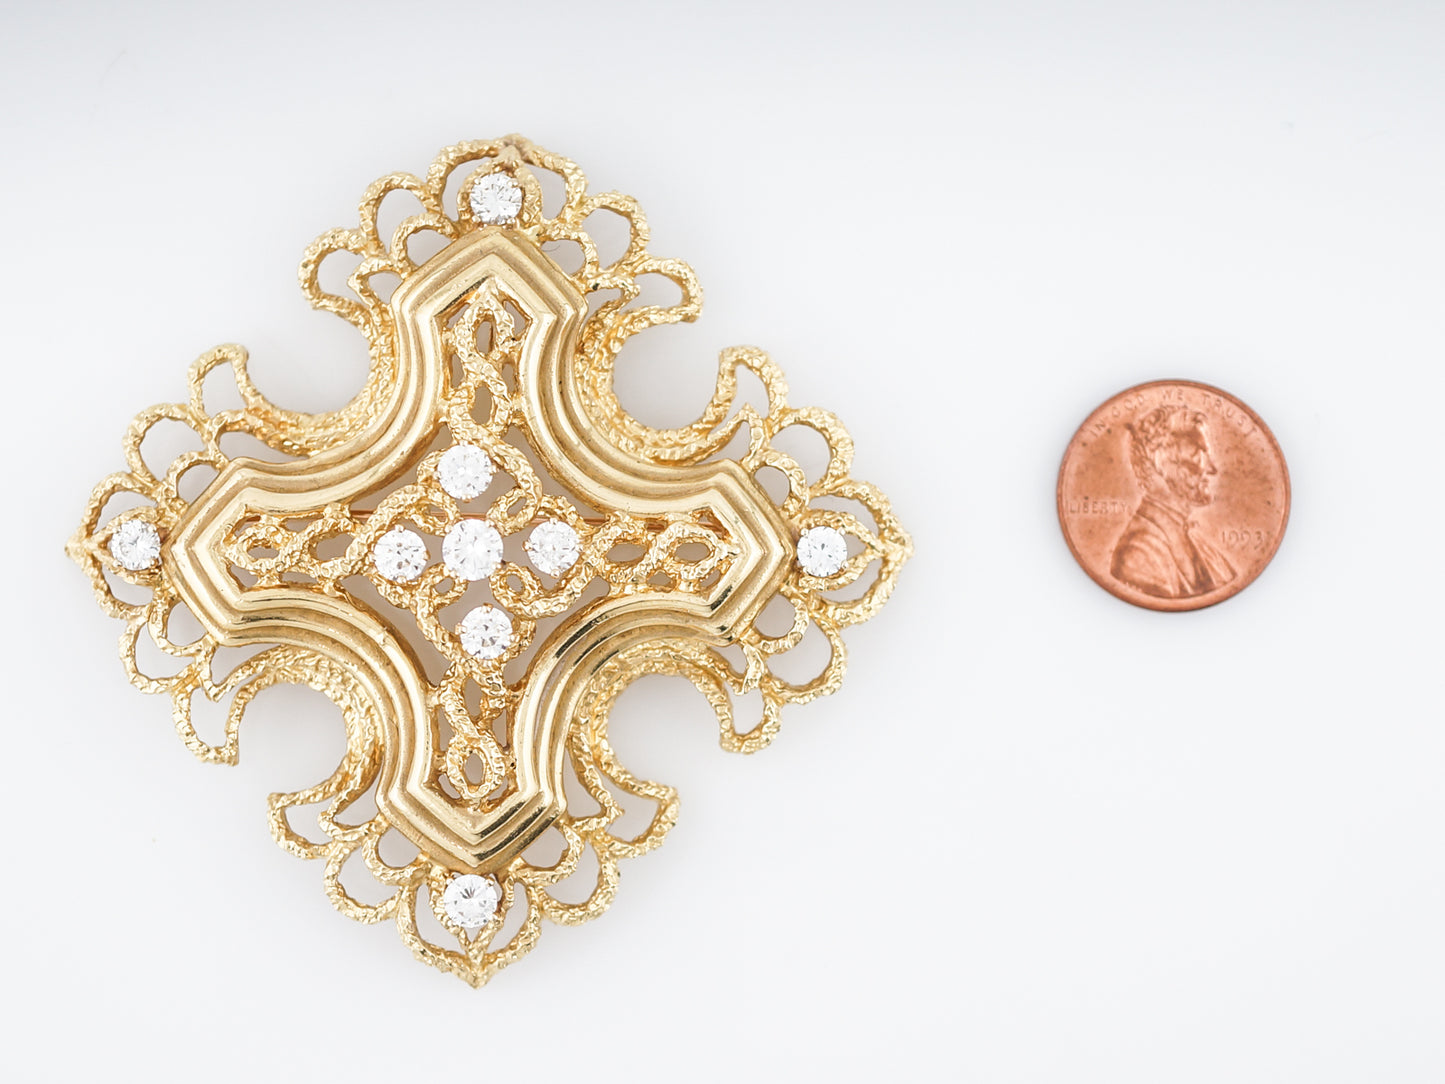 Modern Tiffany & Co Cross Pin 2.08 carats Round Brilliant Cut Diamonds in 18k Yellow Gold